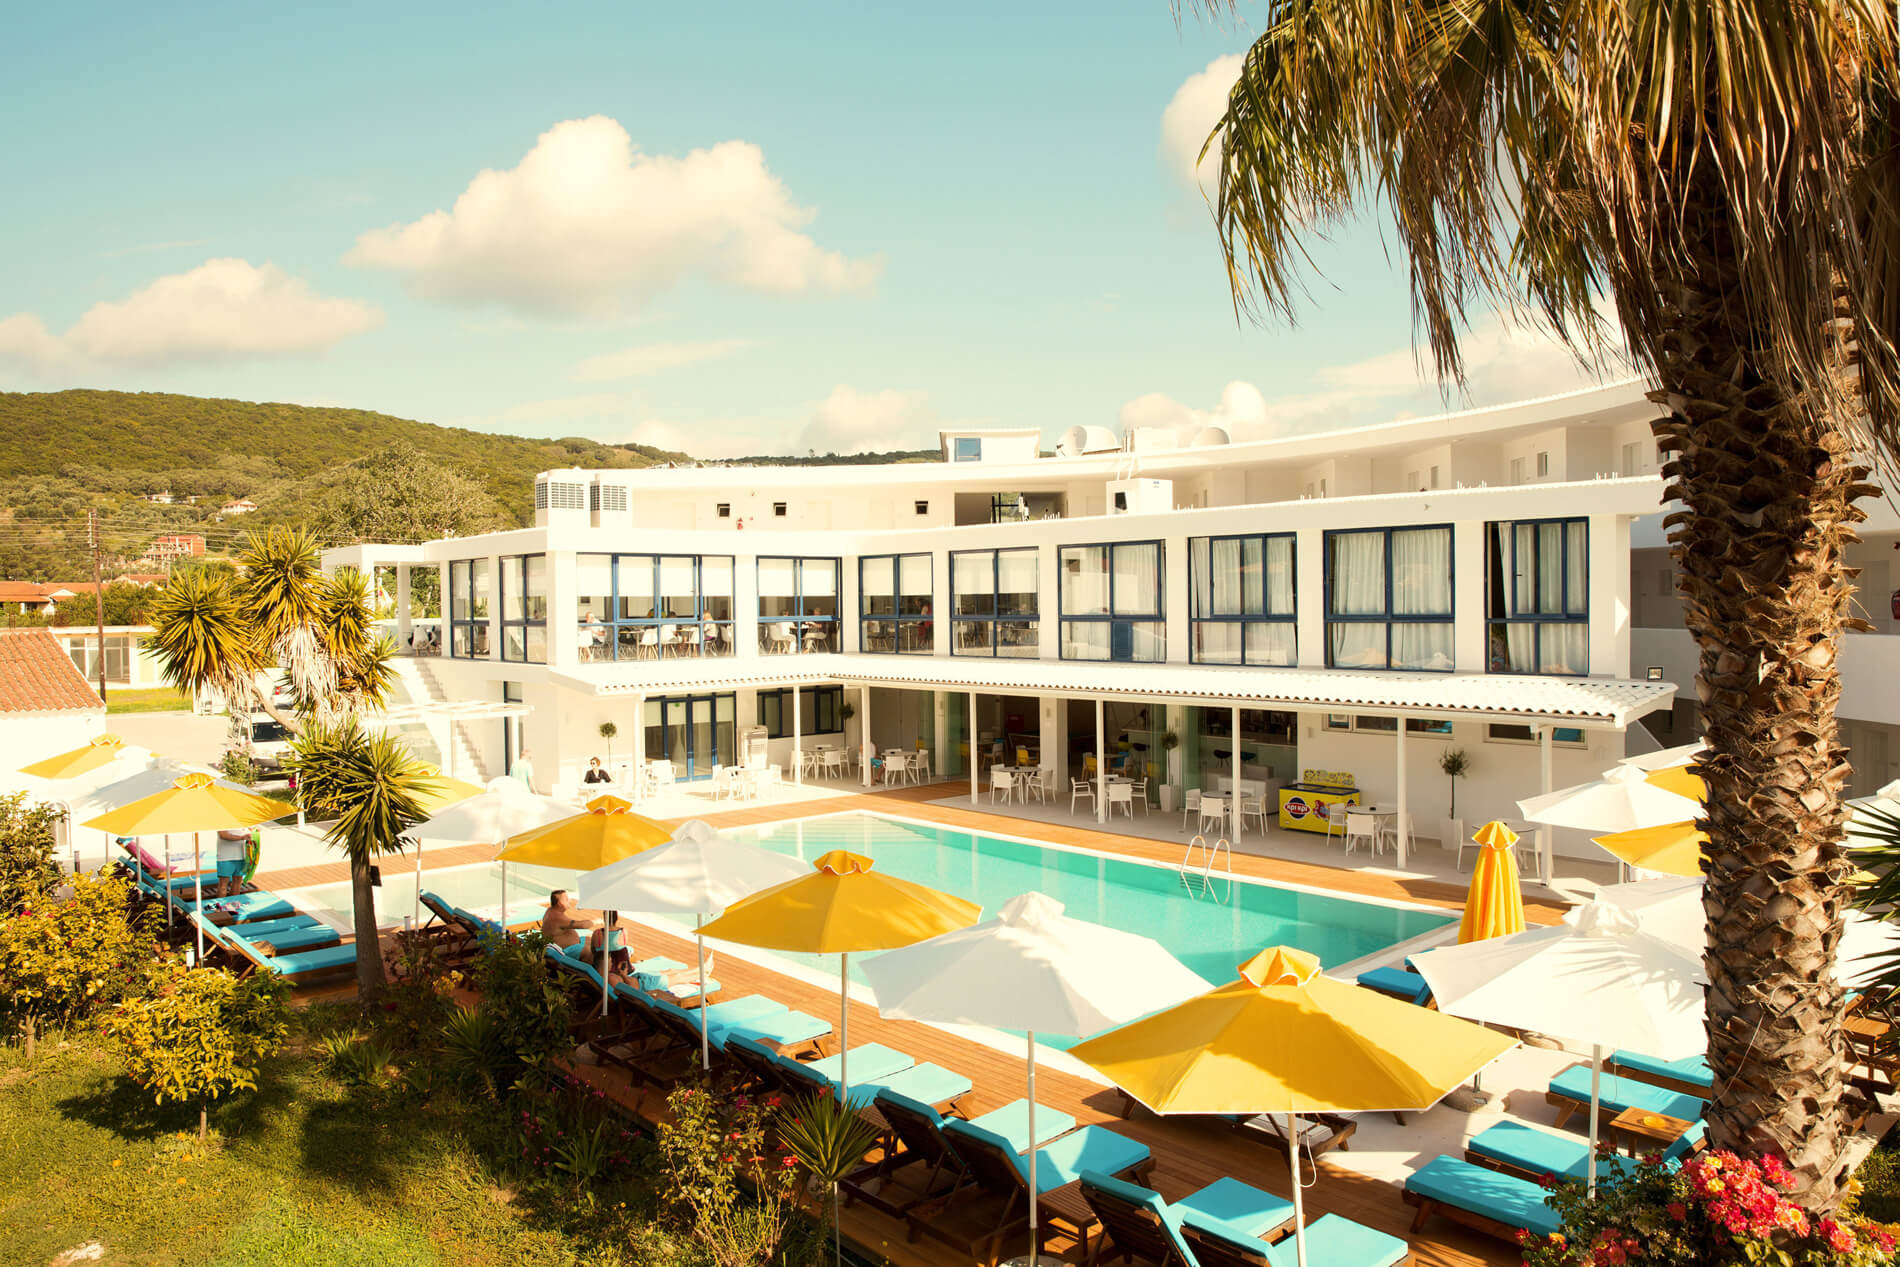 Nasos Hotel & Resort - Μοραϊτικα, Κέρκυρα ✦ -30%